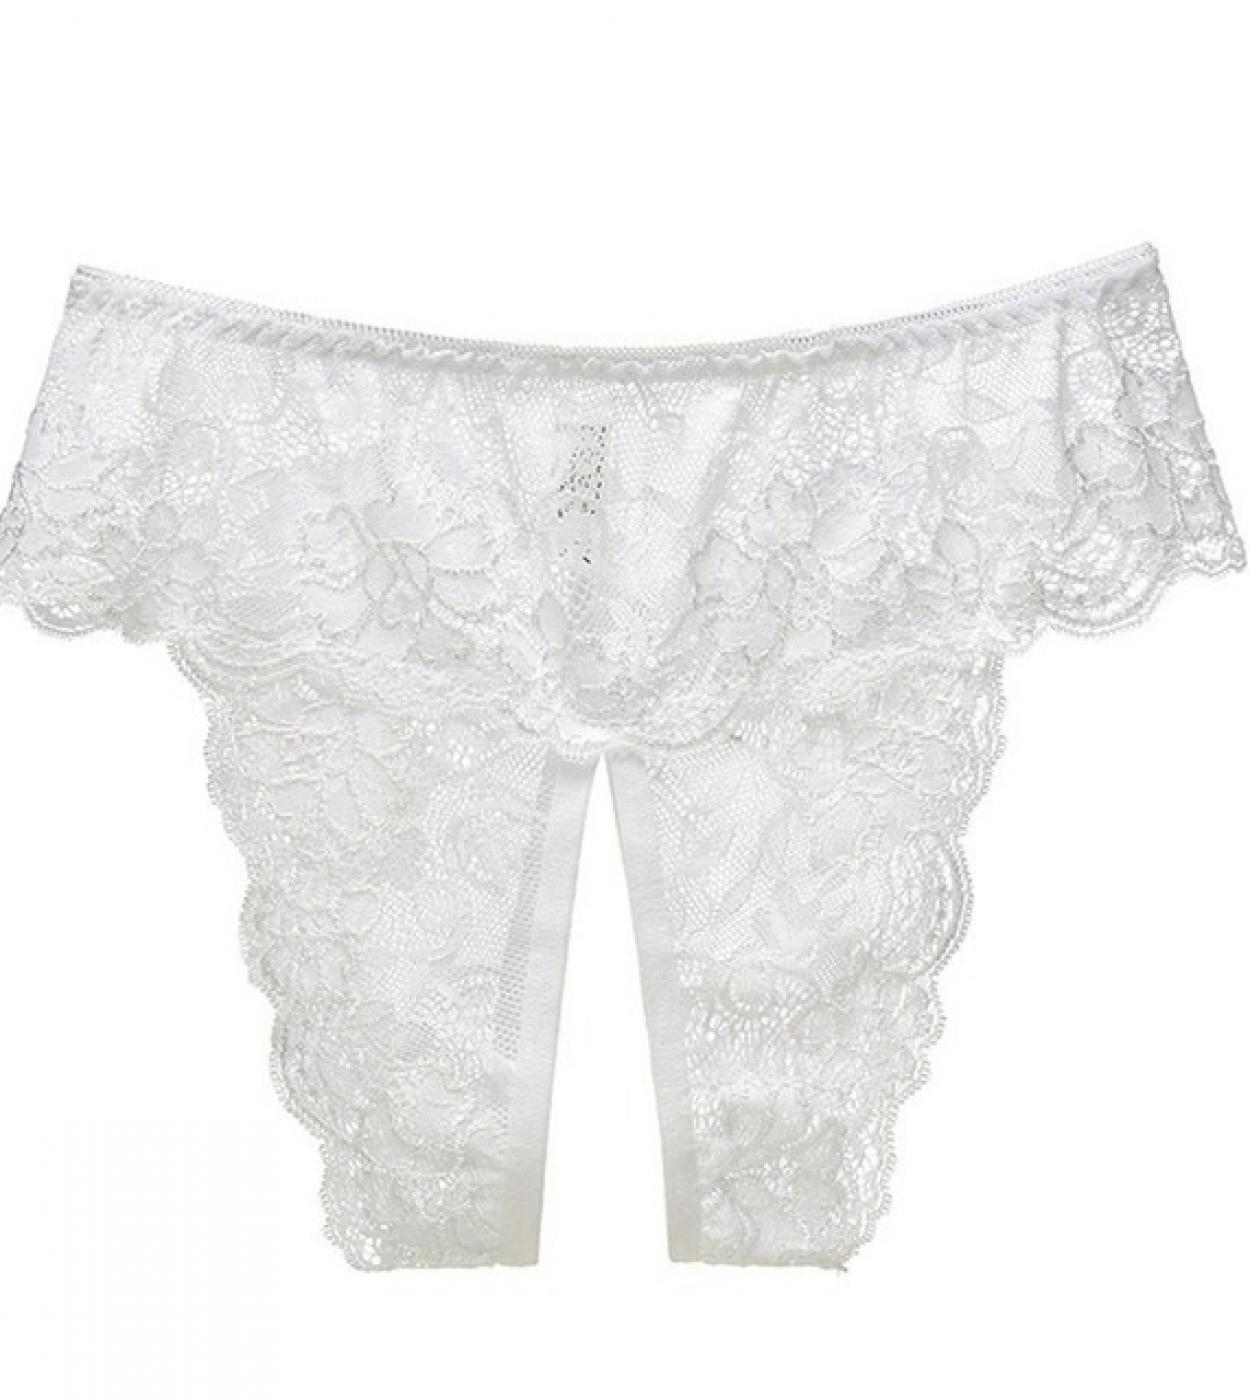  A7Jrbda Plus Size Crotchless Transparent Panties Women' s Thong  Open Crotch M 6XL Lace Underwear (Color : Ivory, Size : 5XL) : Clothing,  Shoes & Jewelry